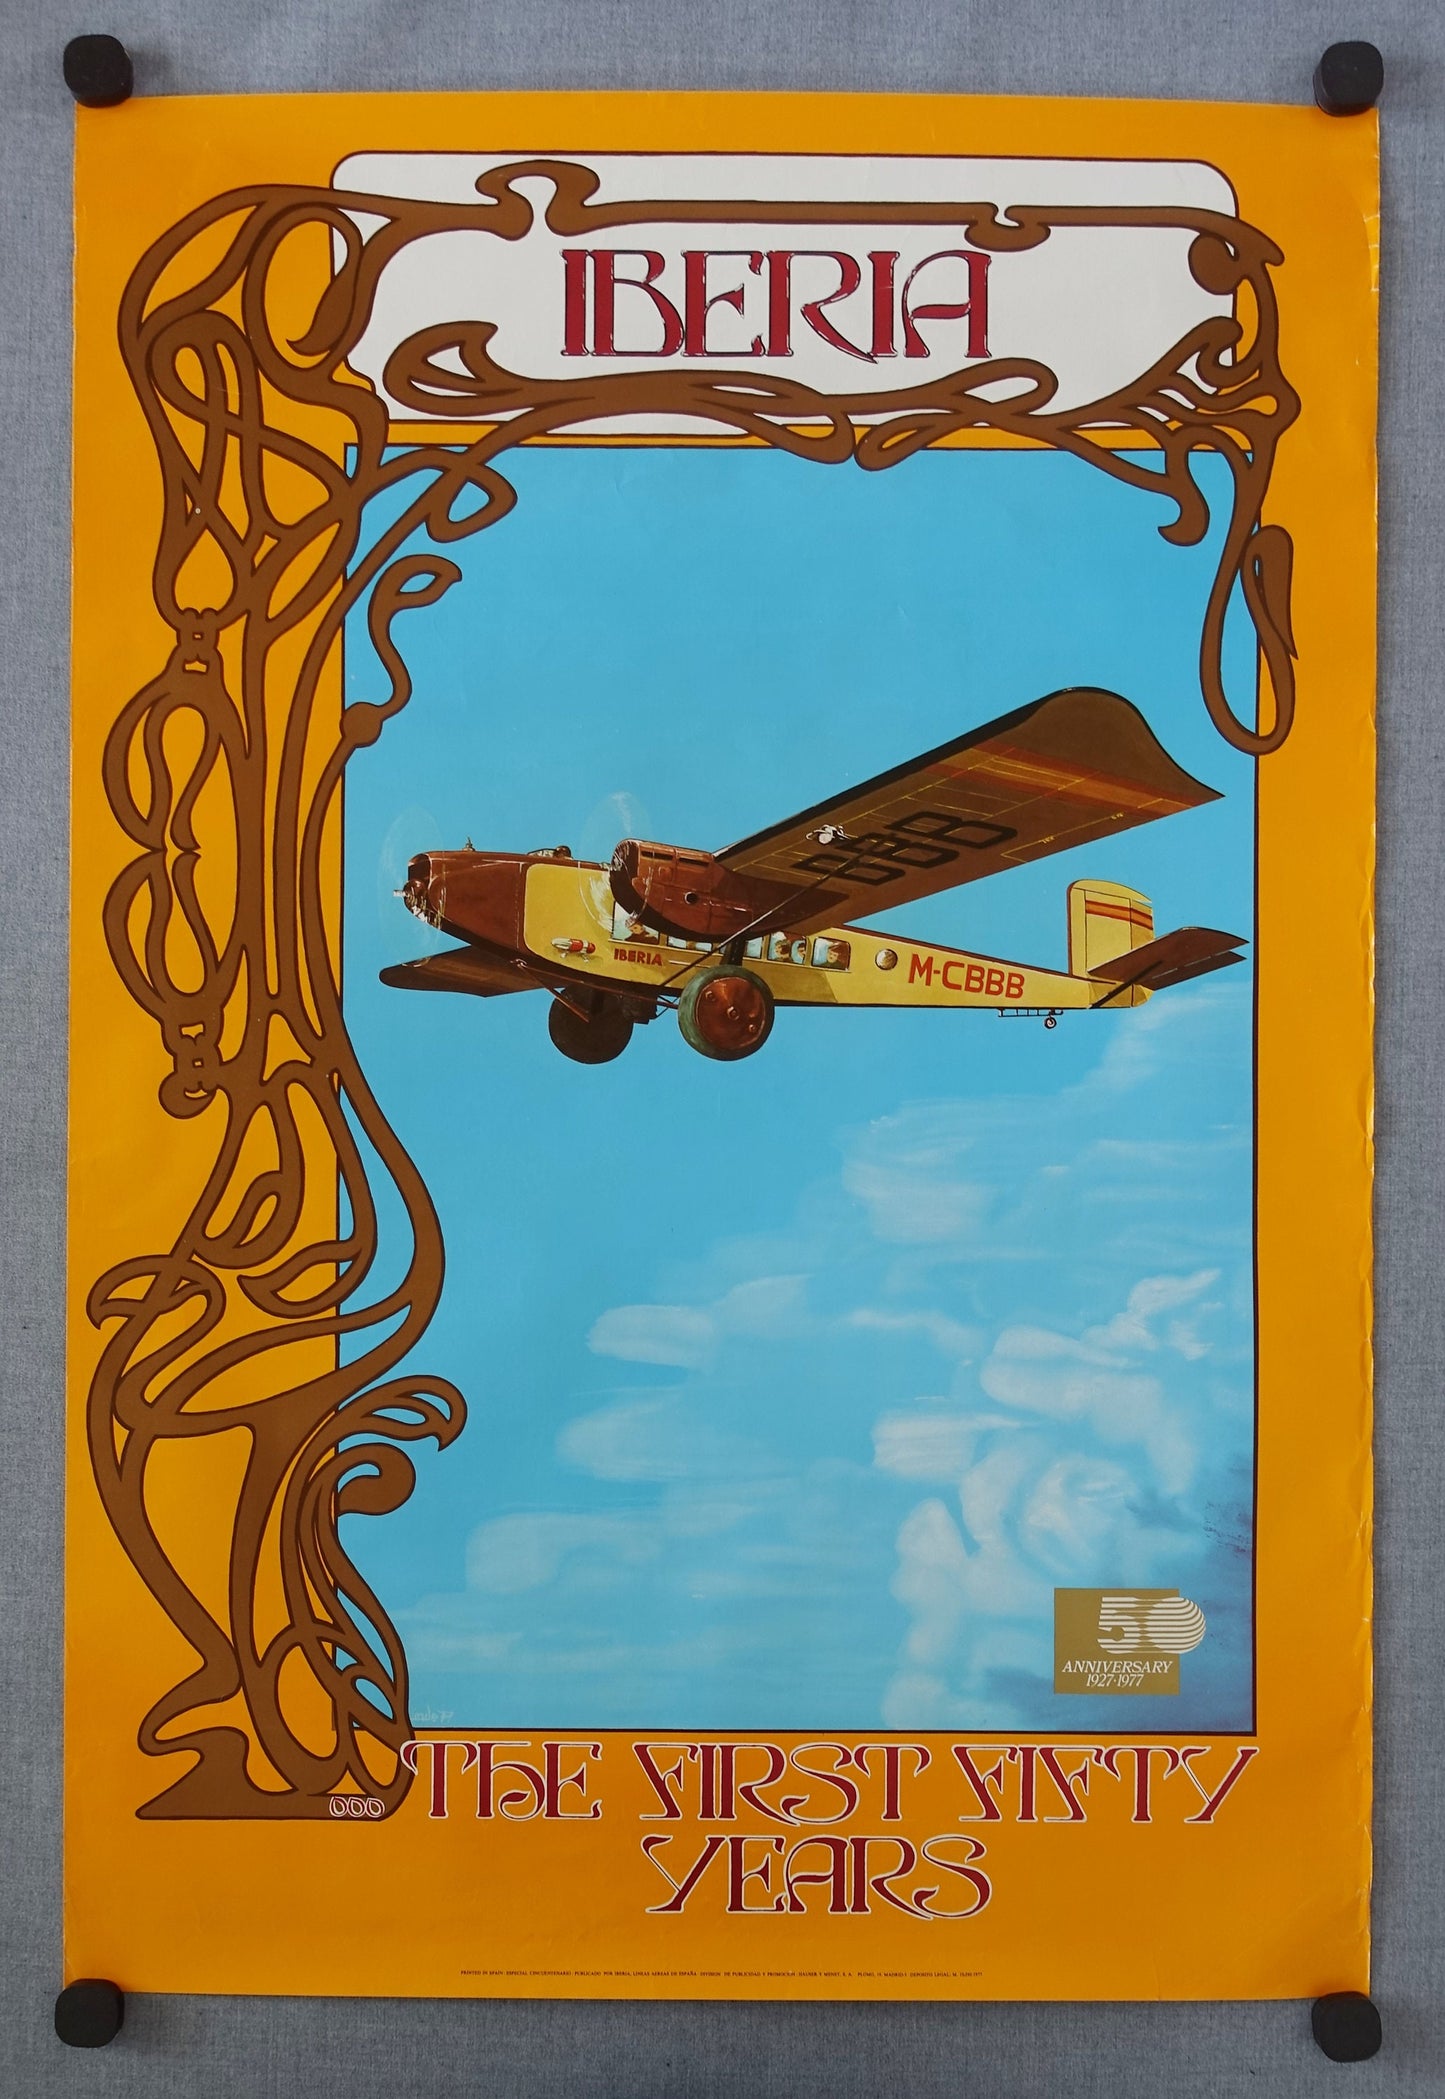 1977 Iberia Travel Poster 50 years anniversary - Original Vintage Poster